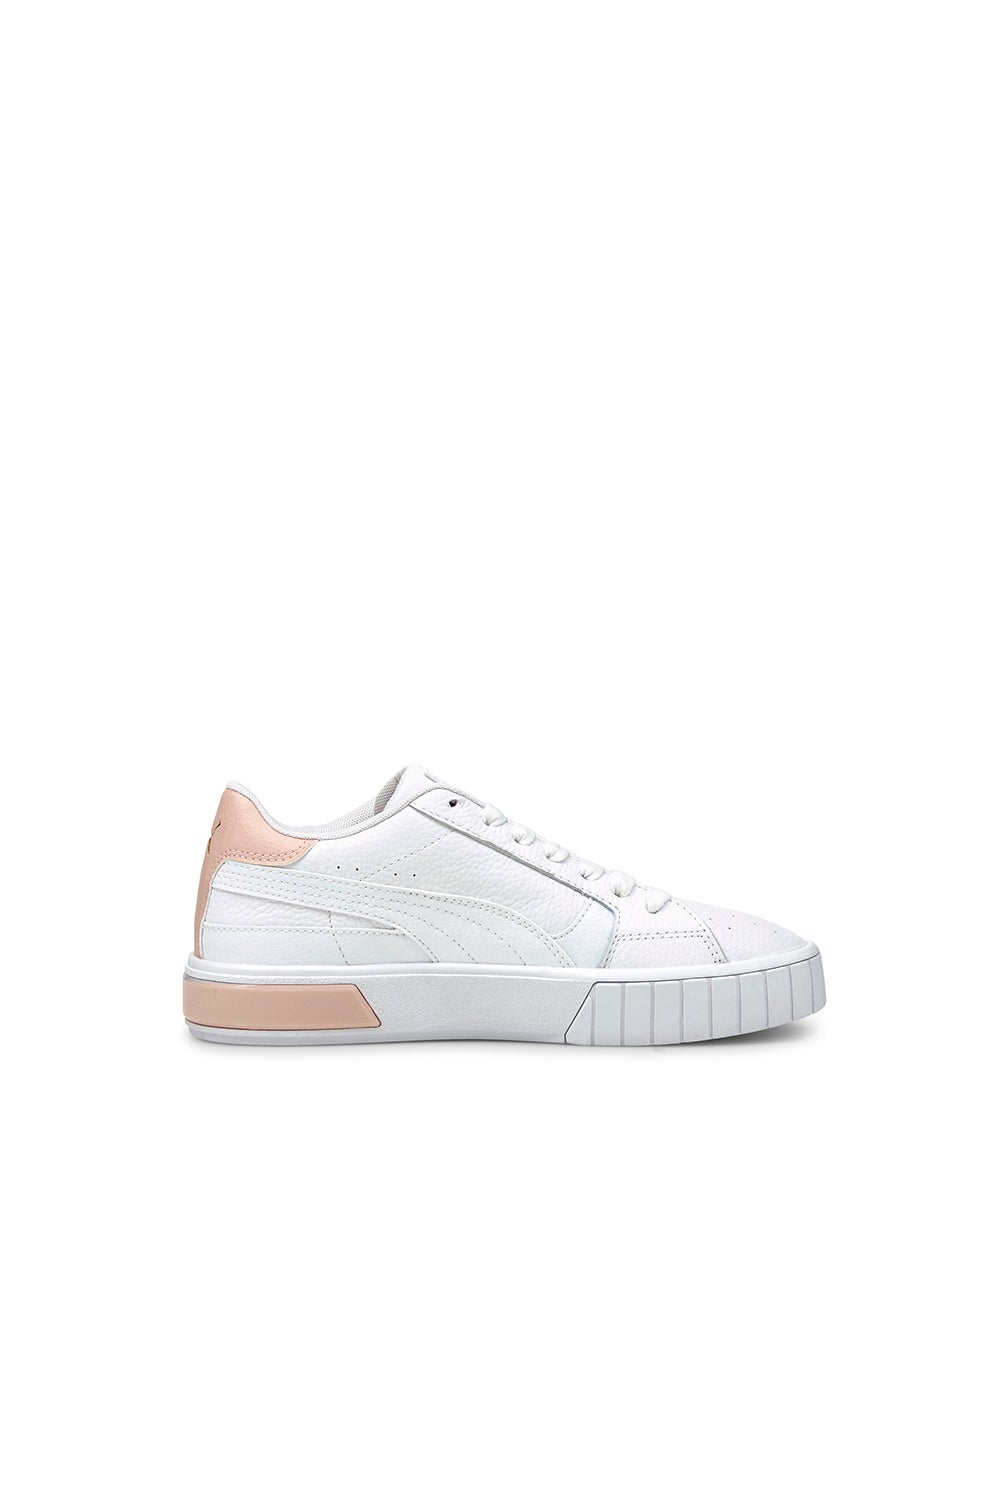 Puma Cali Star Sneakers White/Cloud Pink